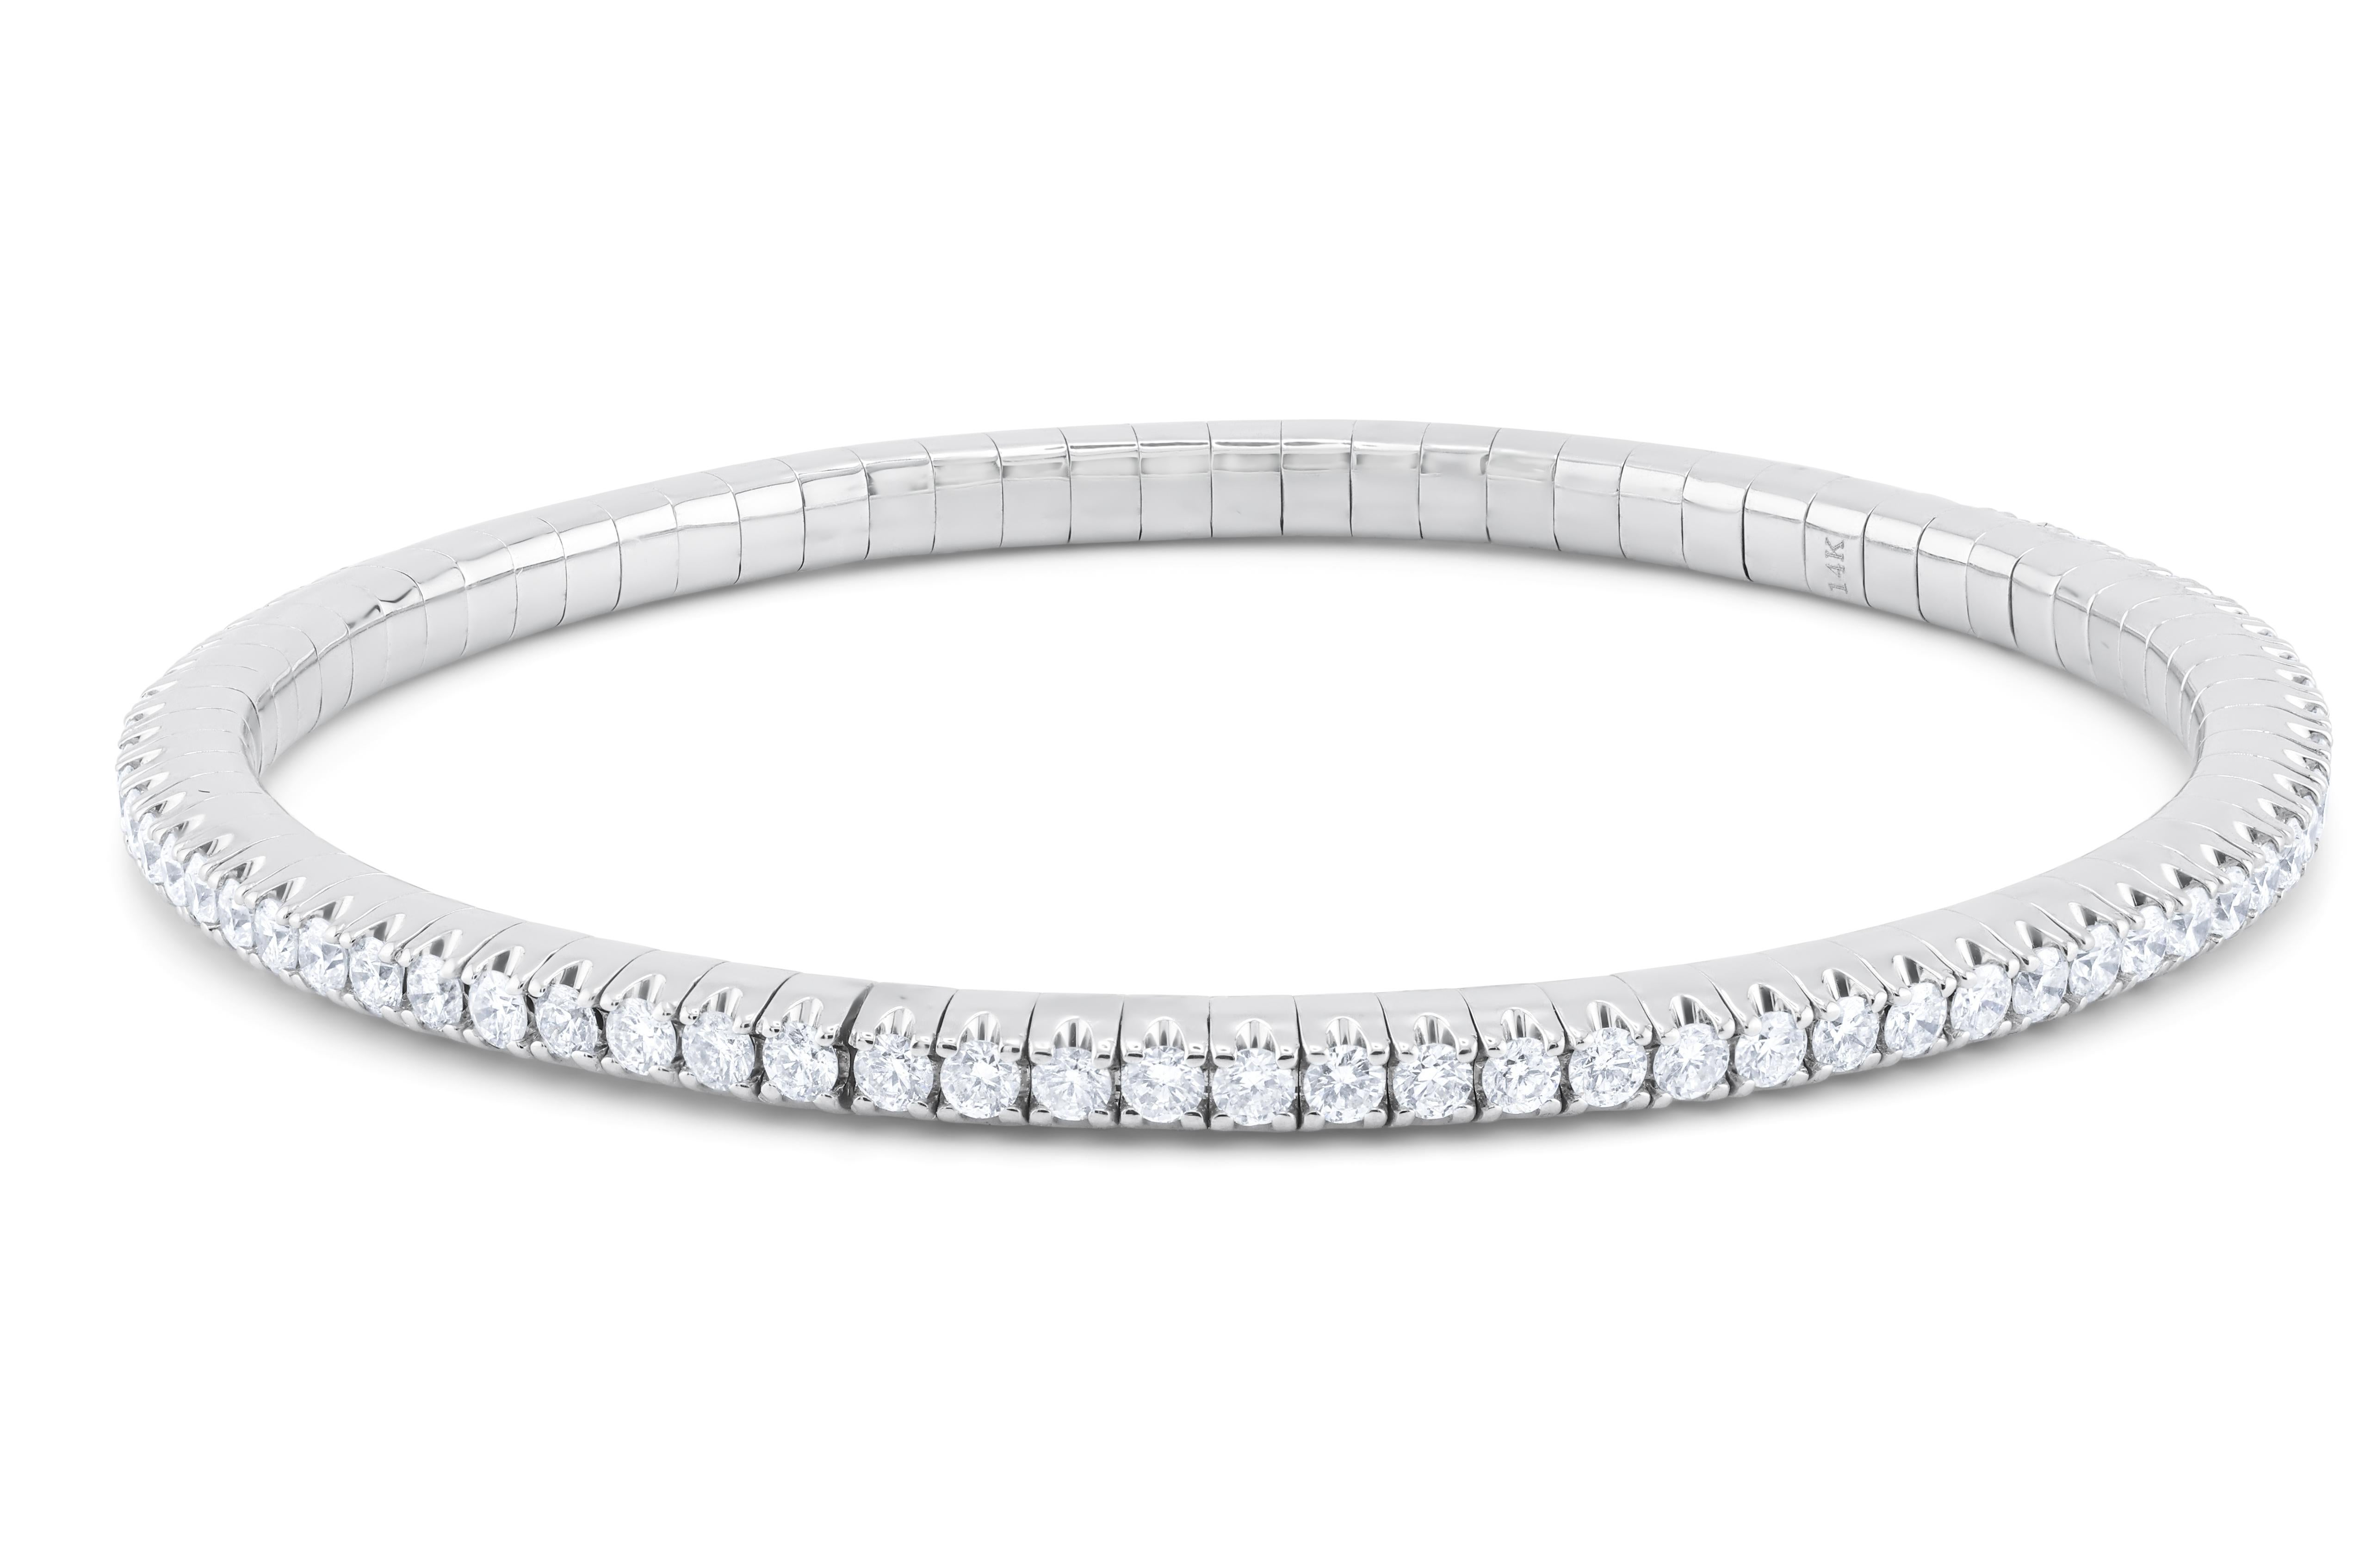 14kt white gold flexible slip on bangle containing 3.25cts of white round diamonds 